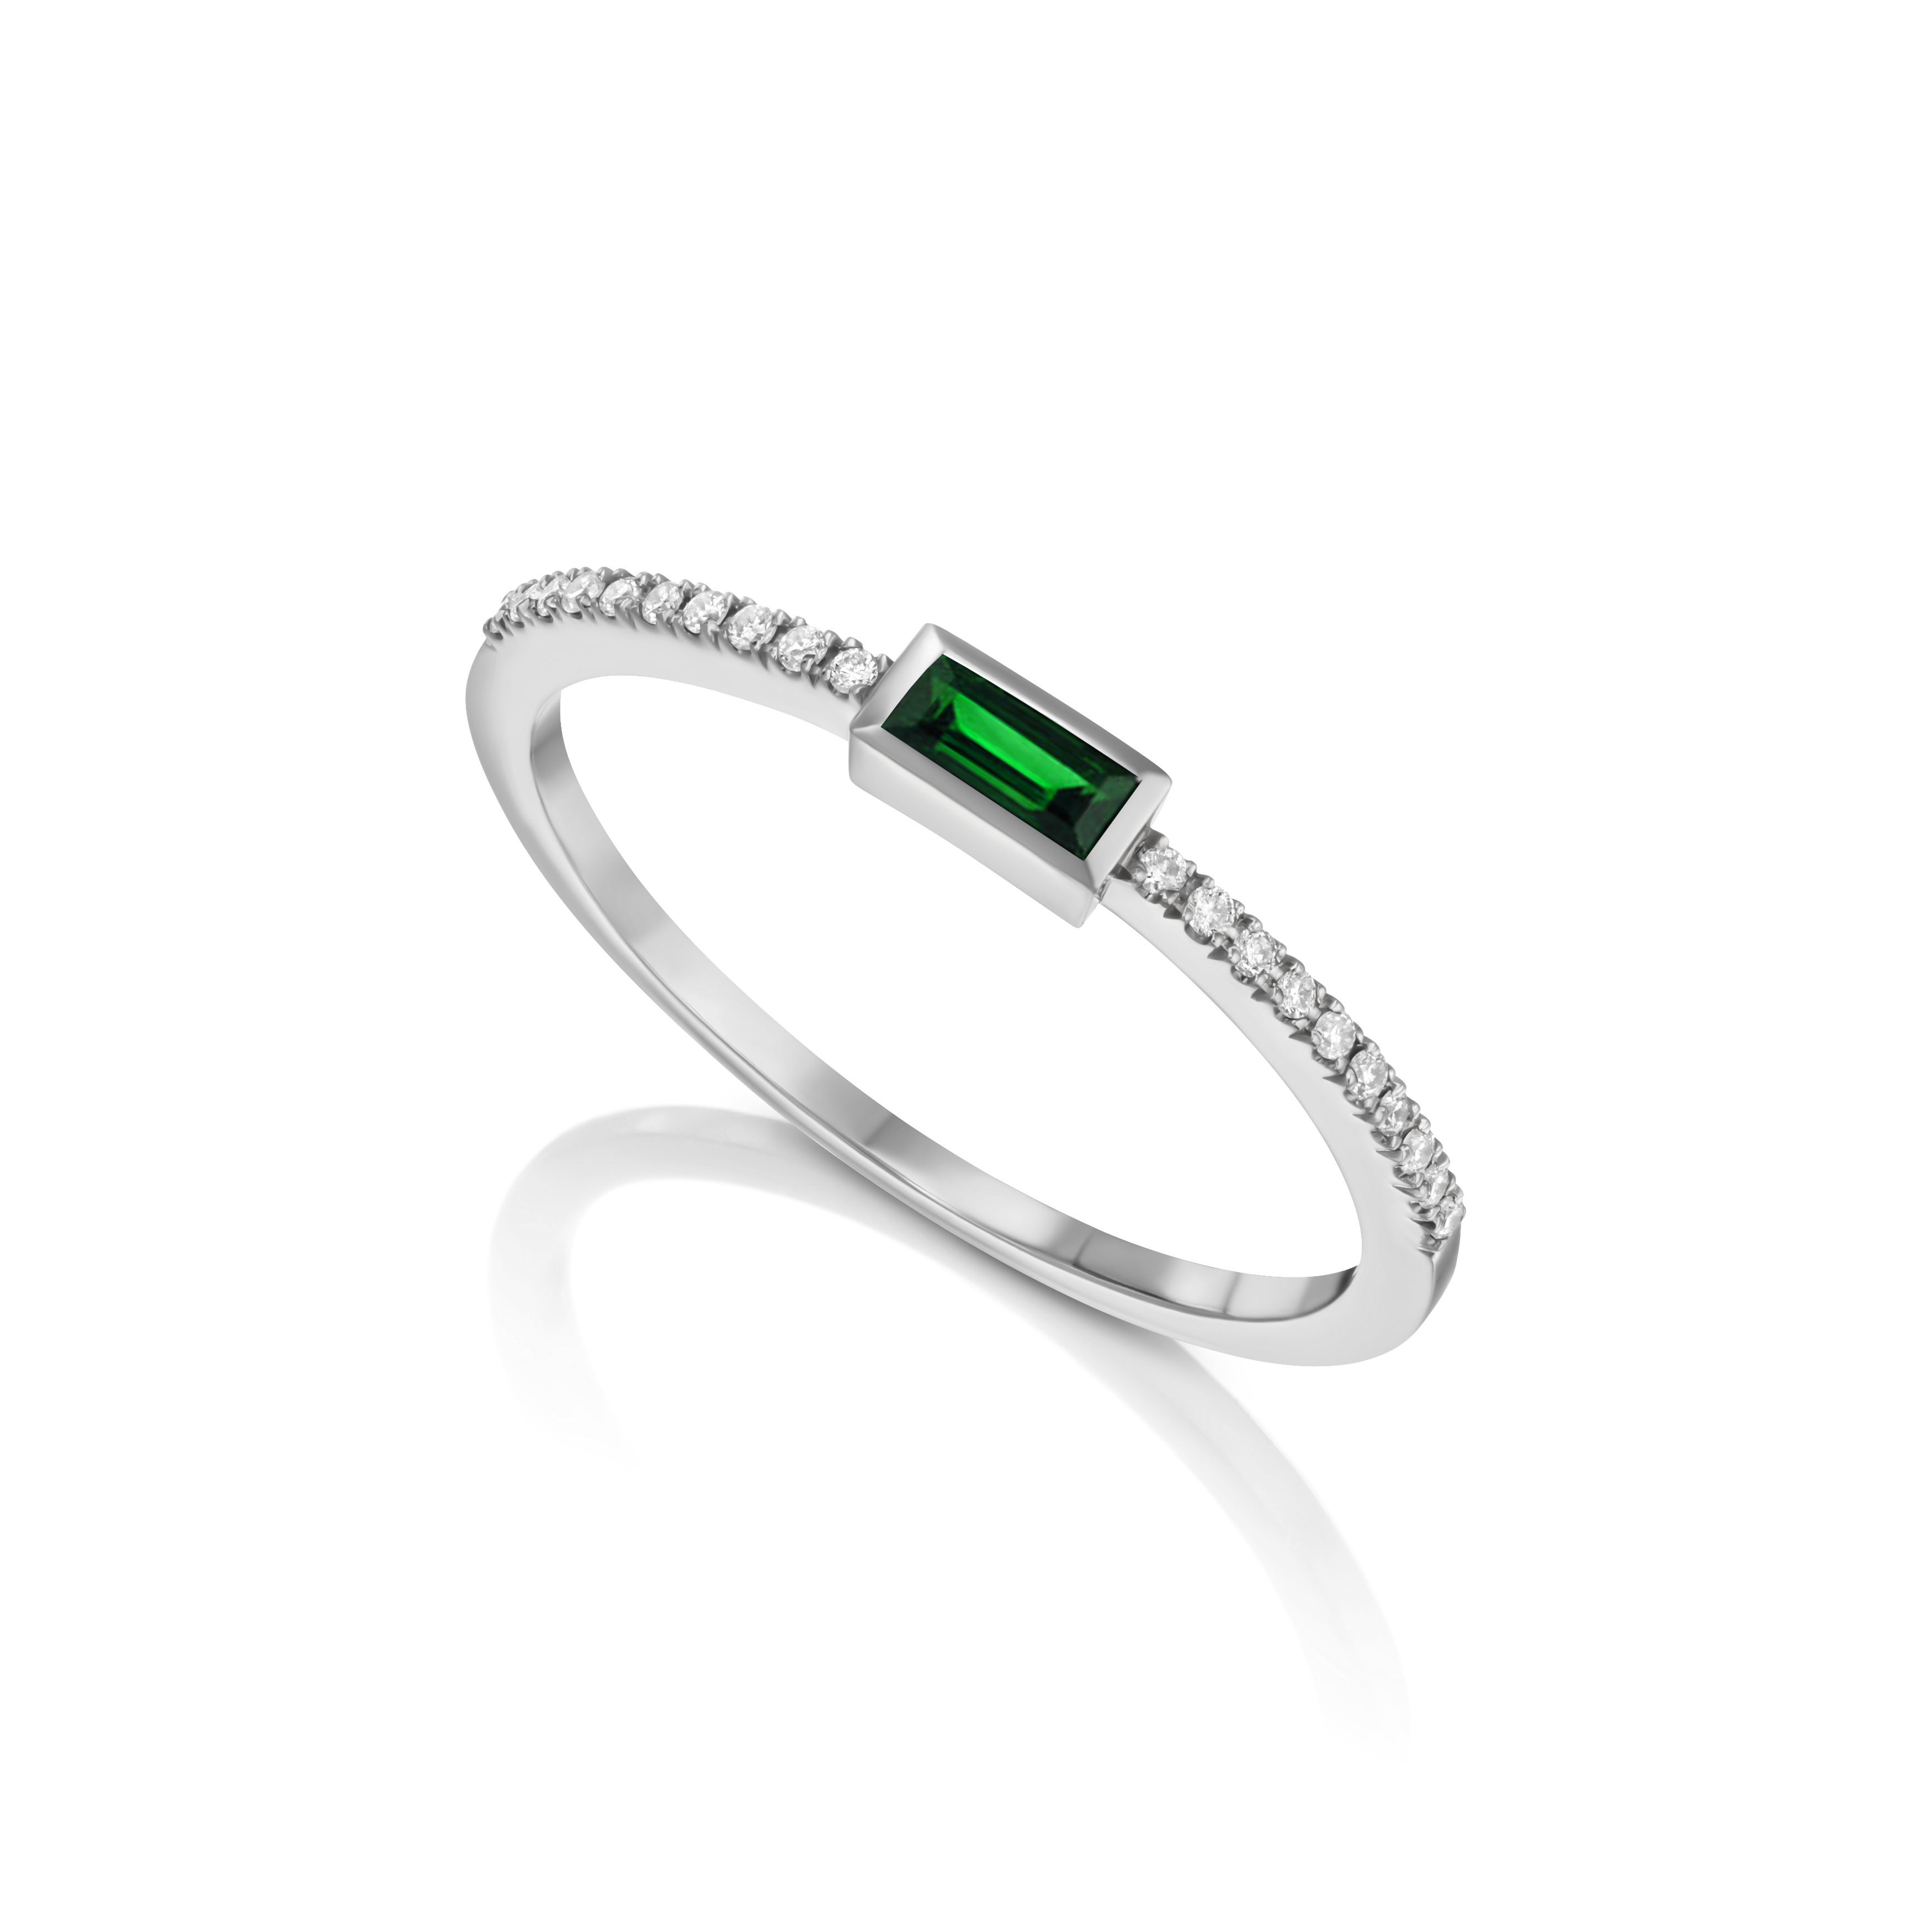 Mini emerald cut pave ring